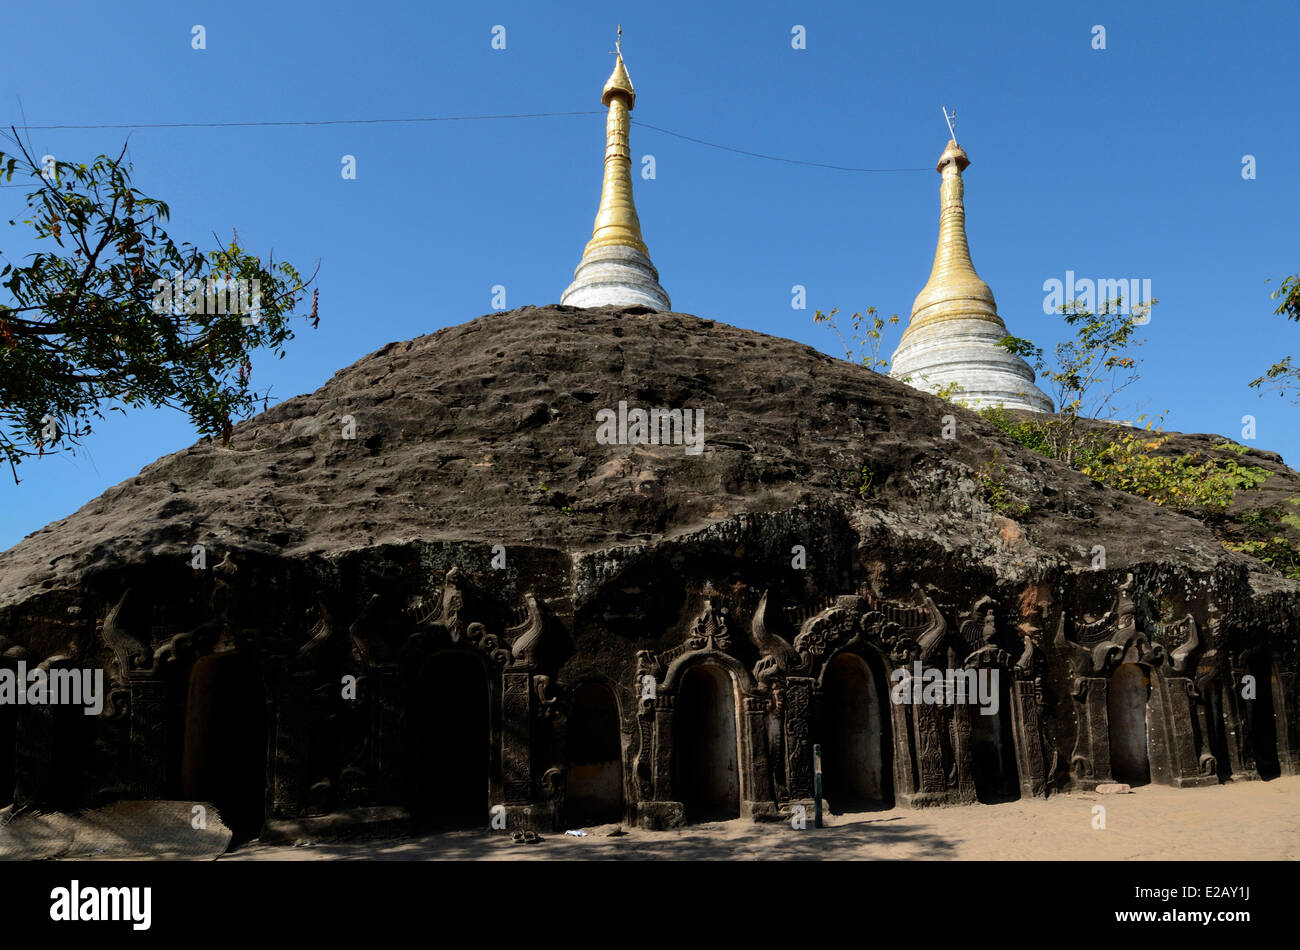 Myanmar (Birmanie), Rhône-Alpes, Monywa, Po Win Daung grottes, troglodytics temple du 14 ème siècle. Banque D'Images